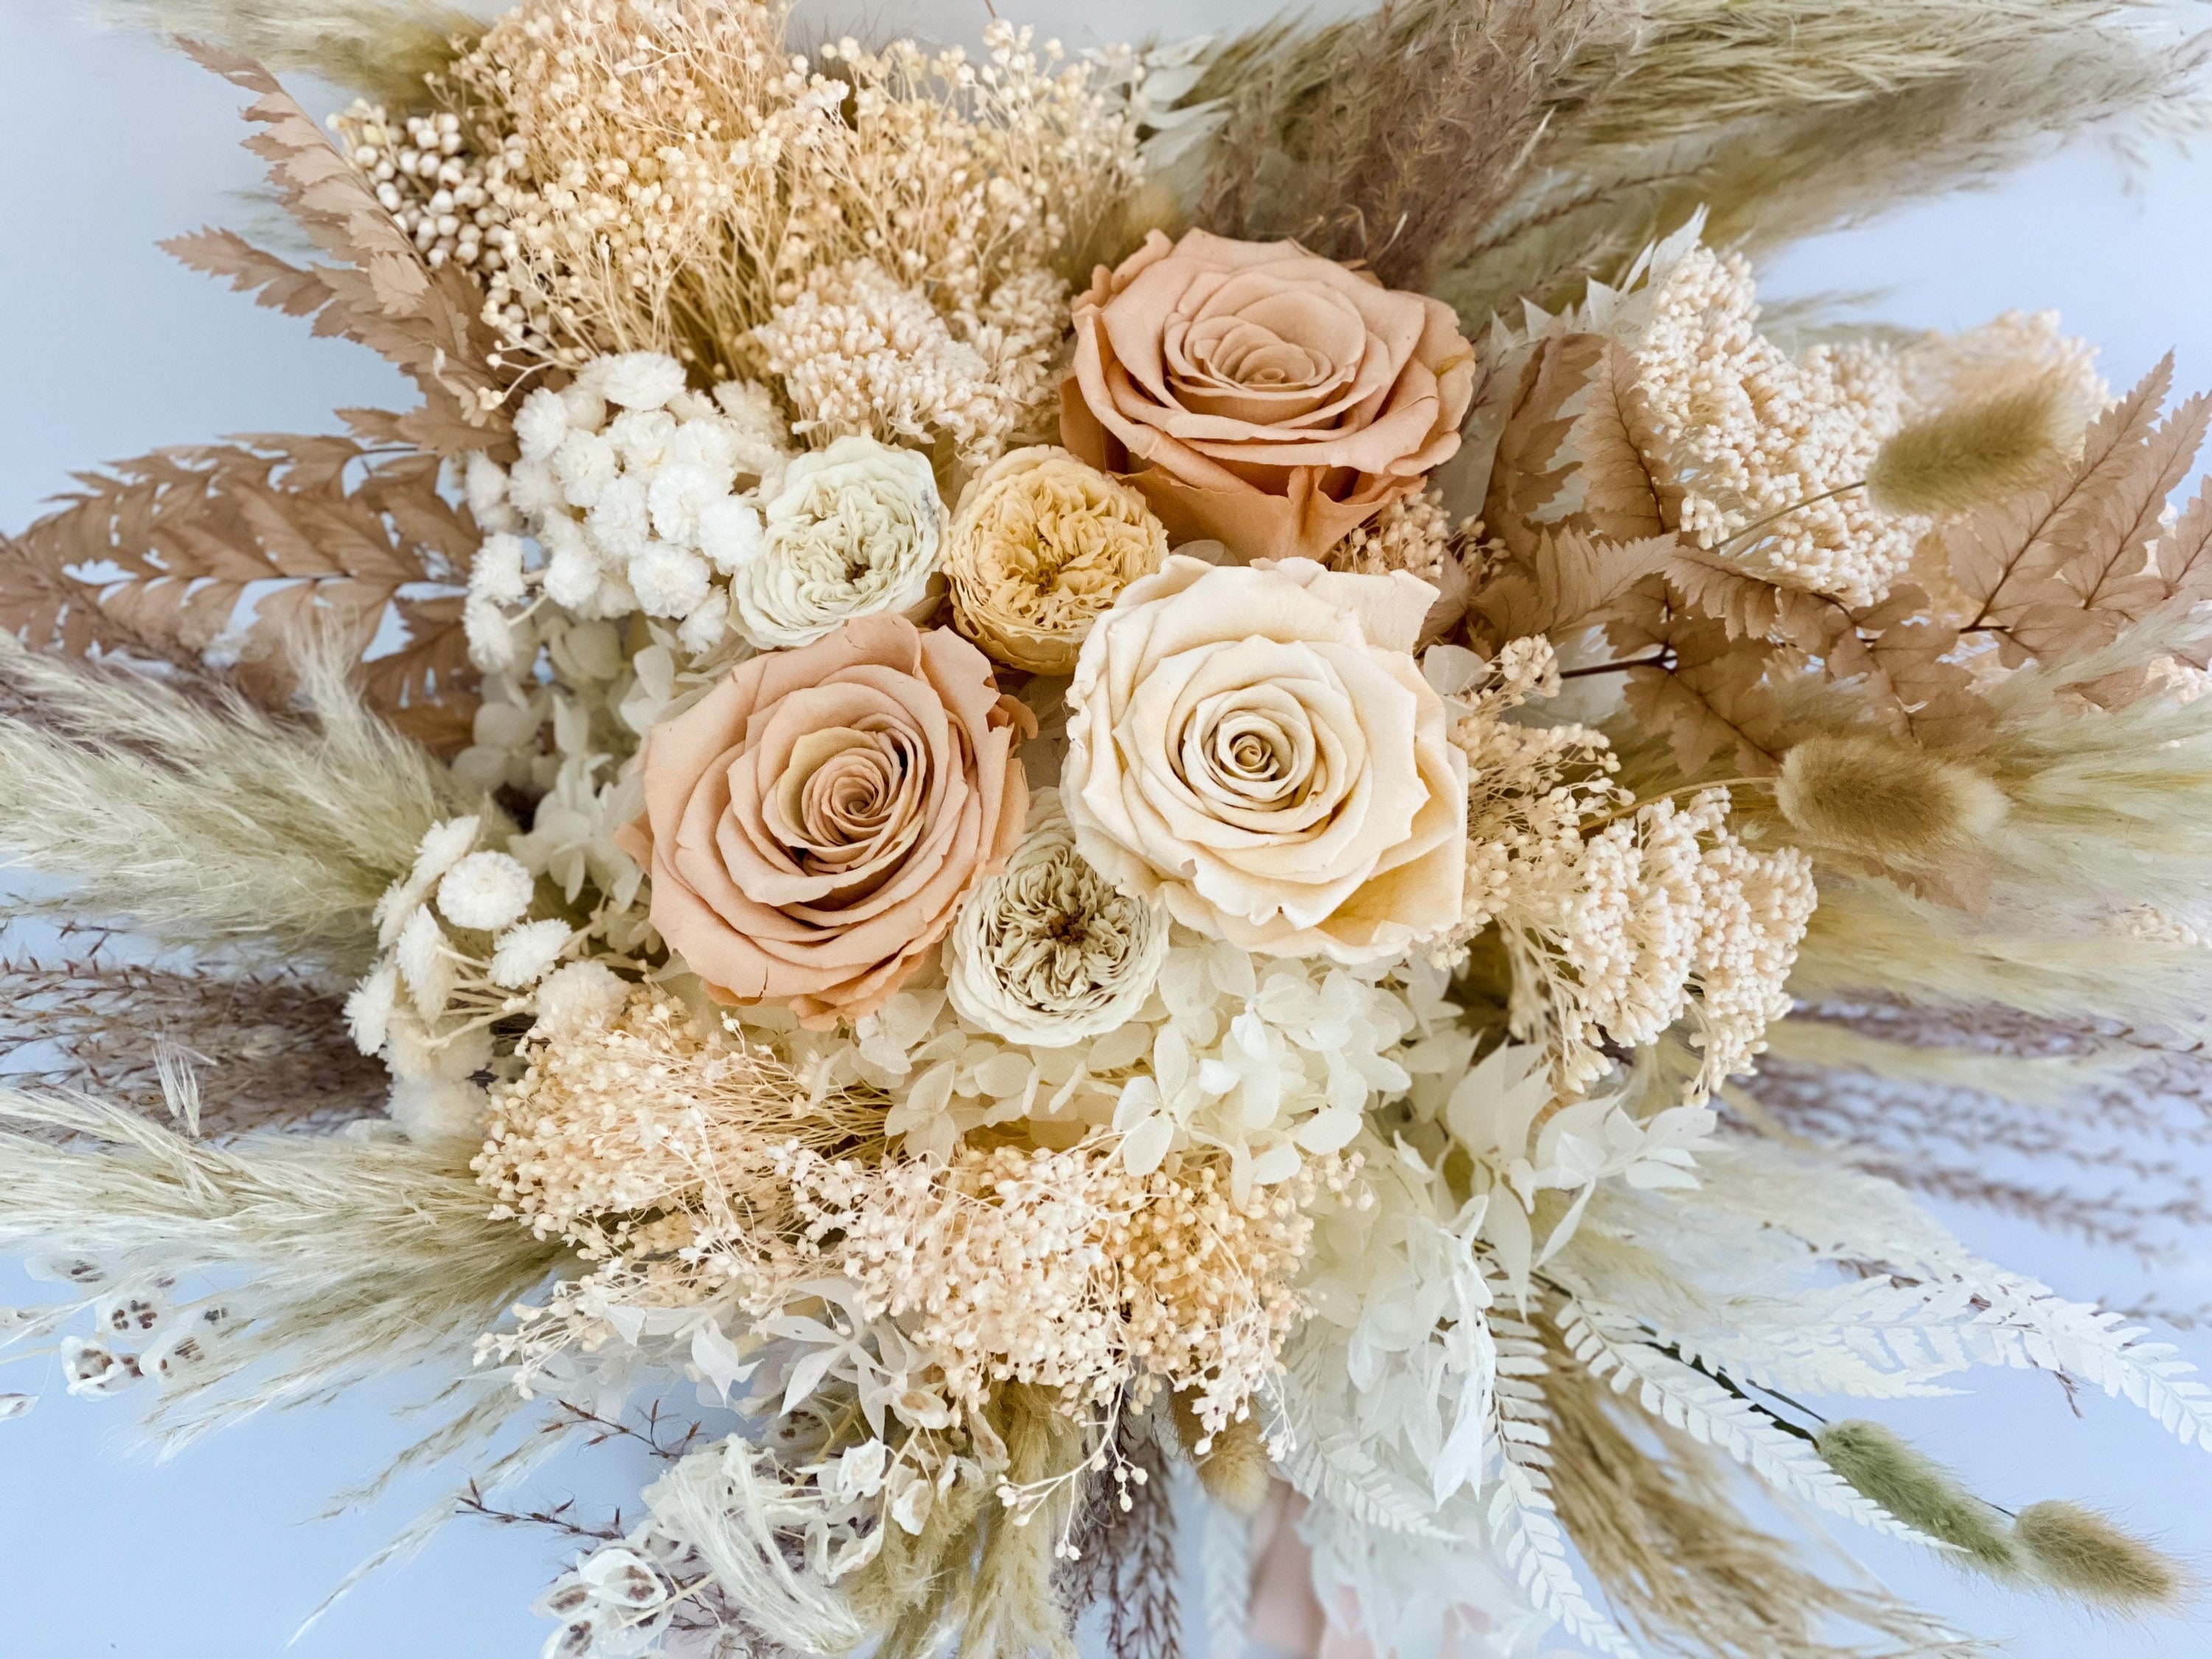 Wedding Bouquet - Peach/Blush/Blue - Dried Flowers Forever